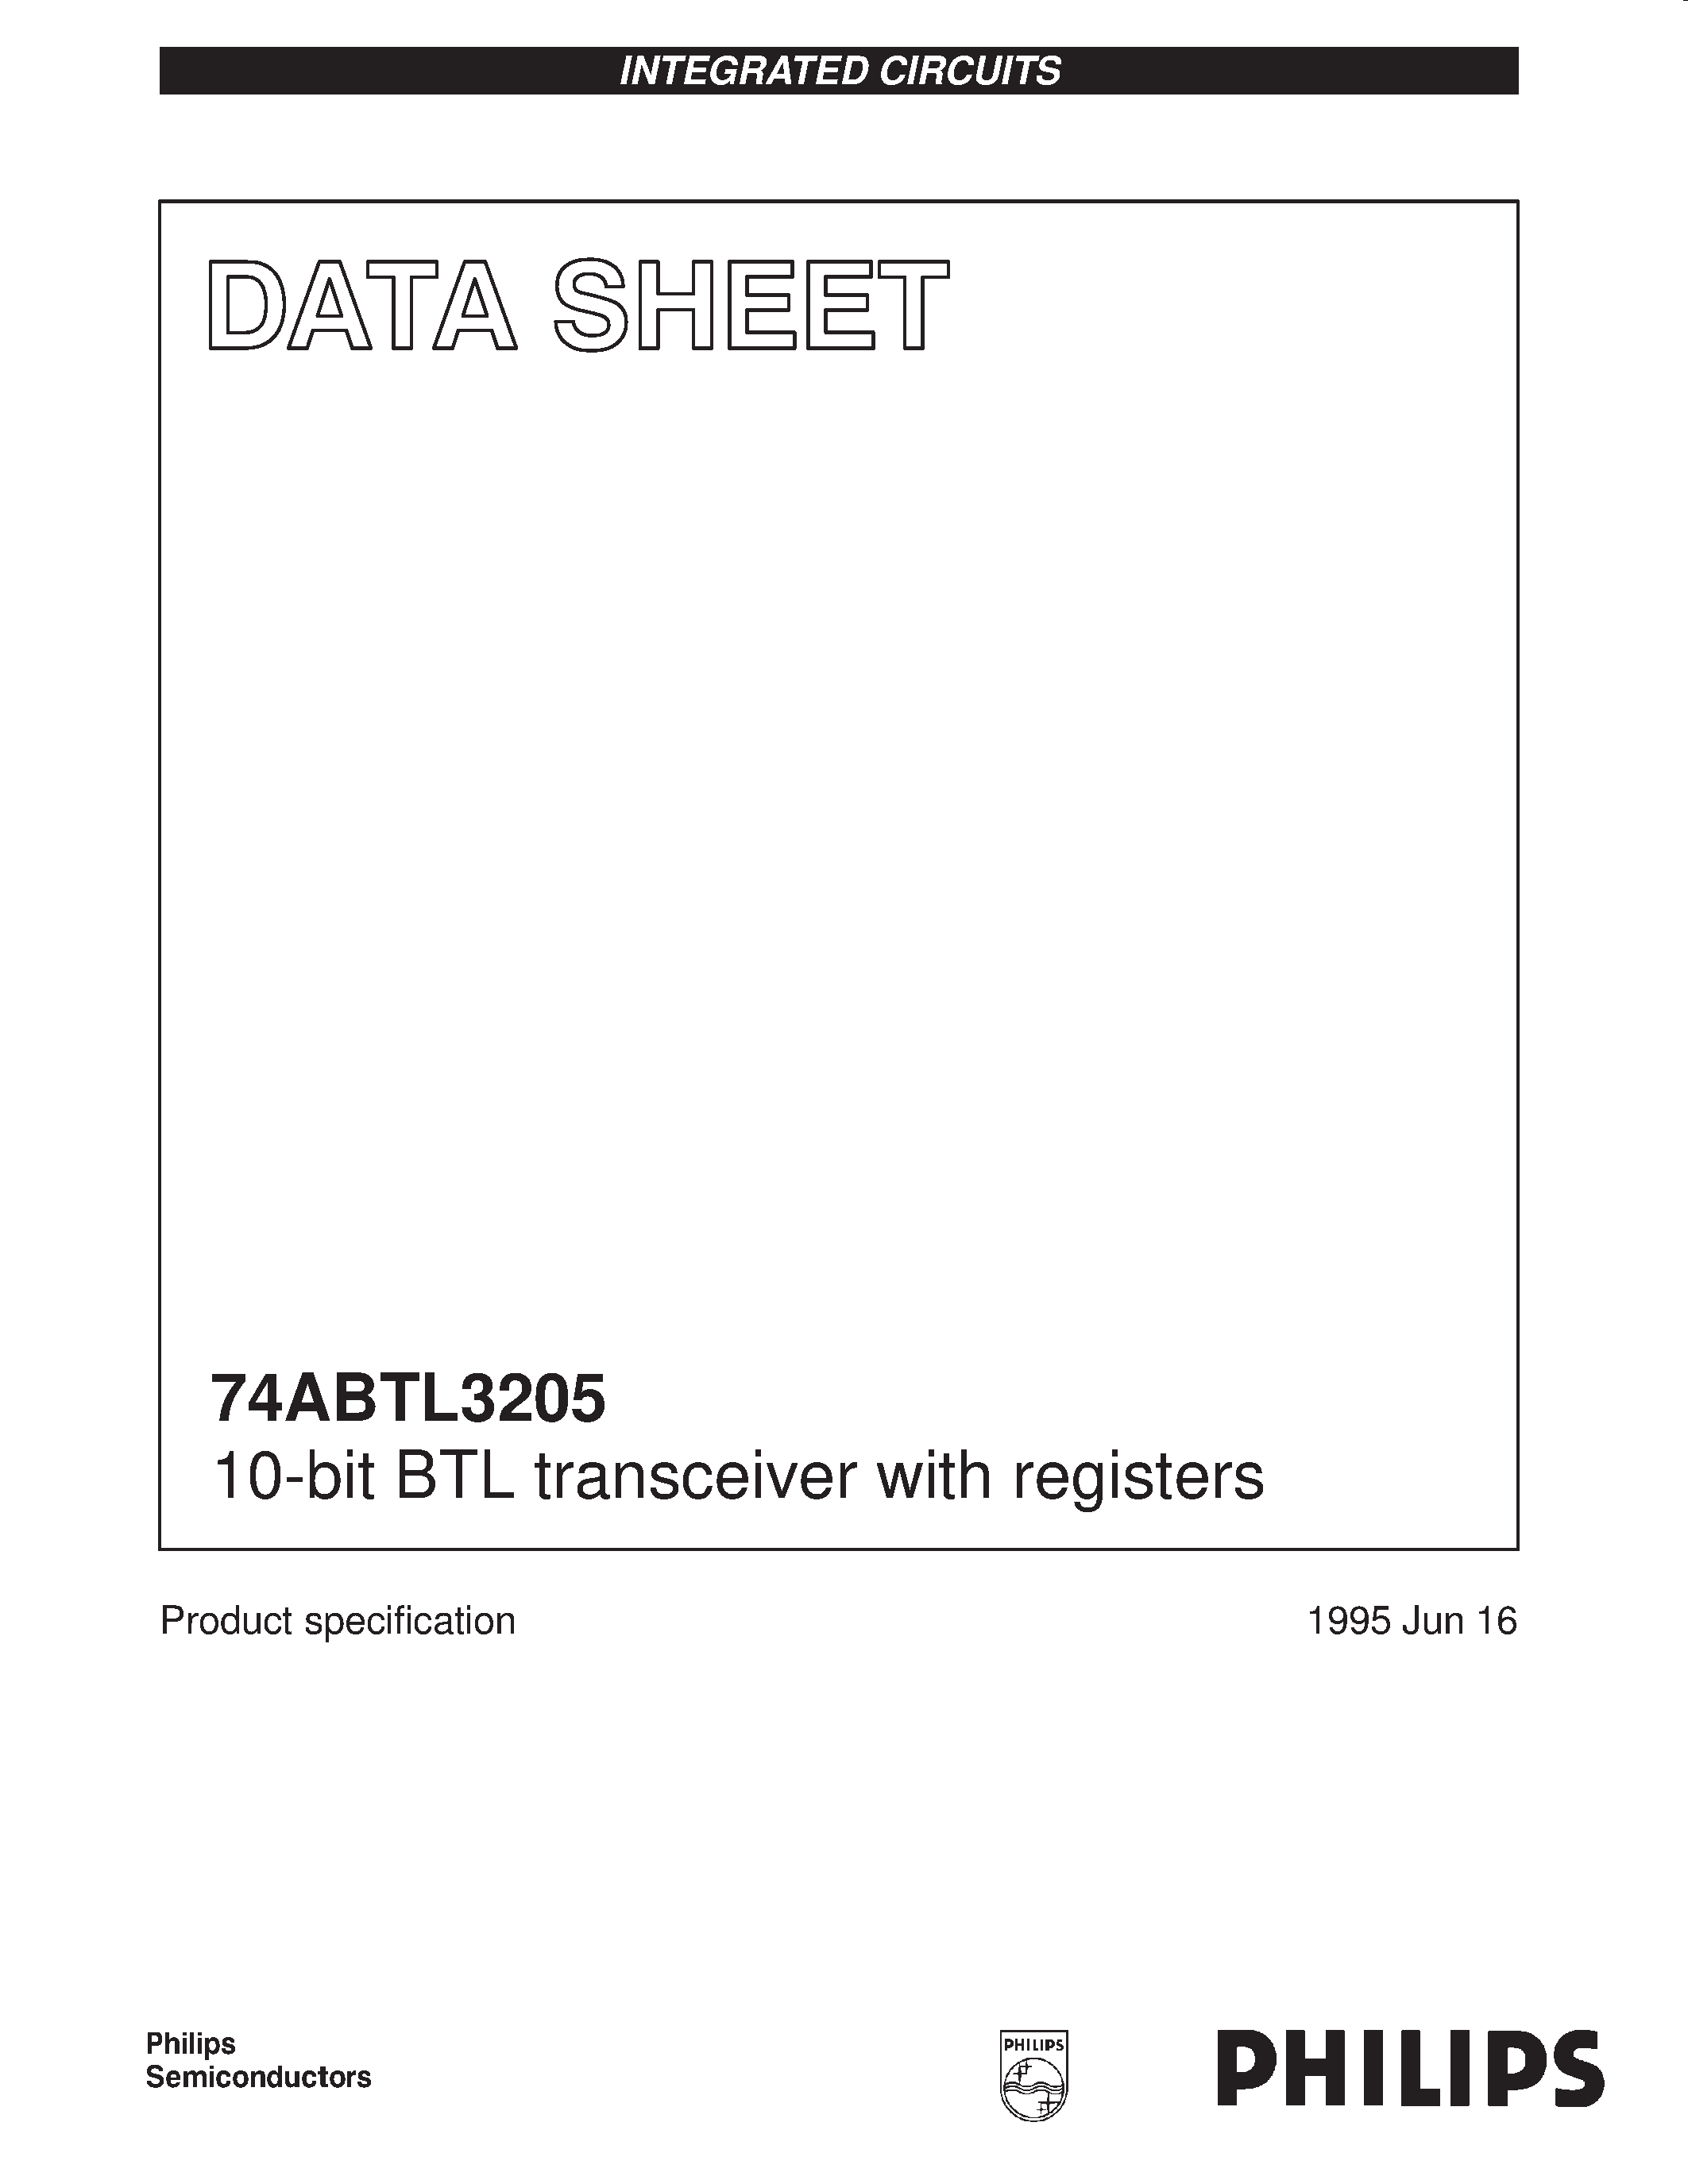 Datasheet 74ABTL3205BB - 10-bit BTL transceiver with registers page 1